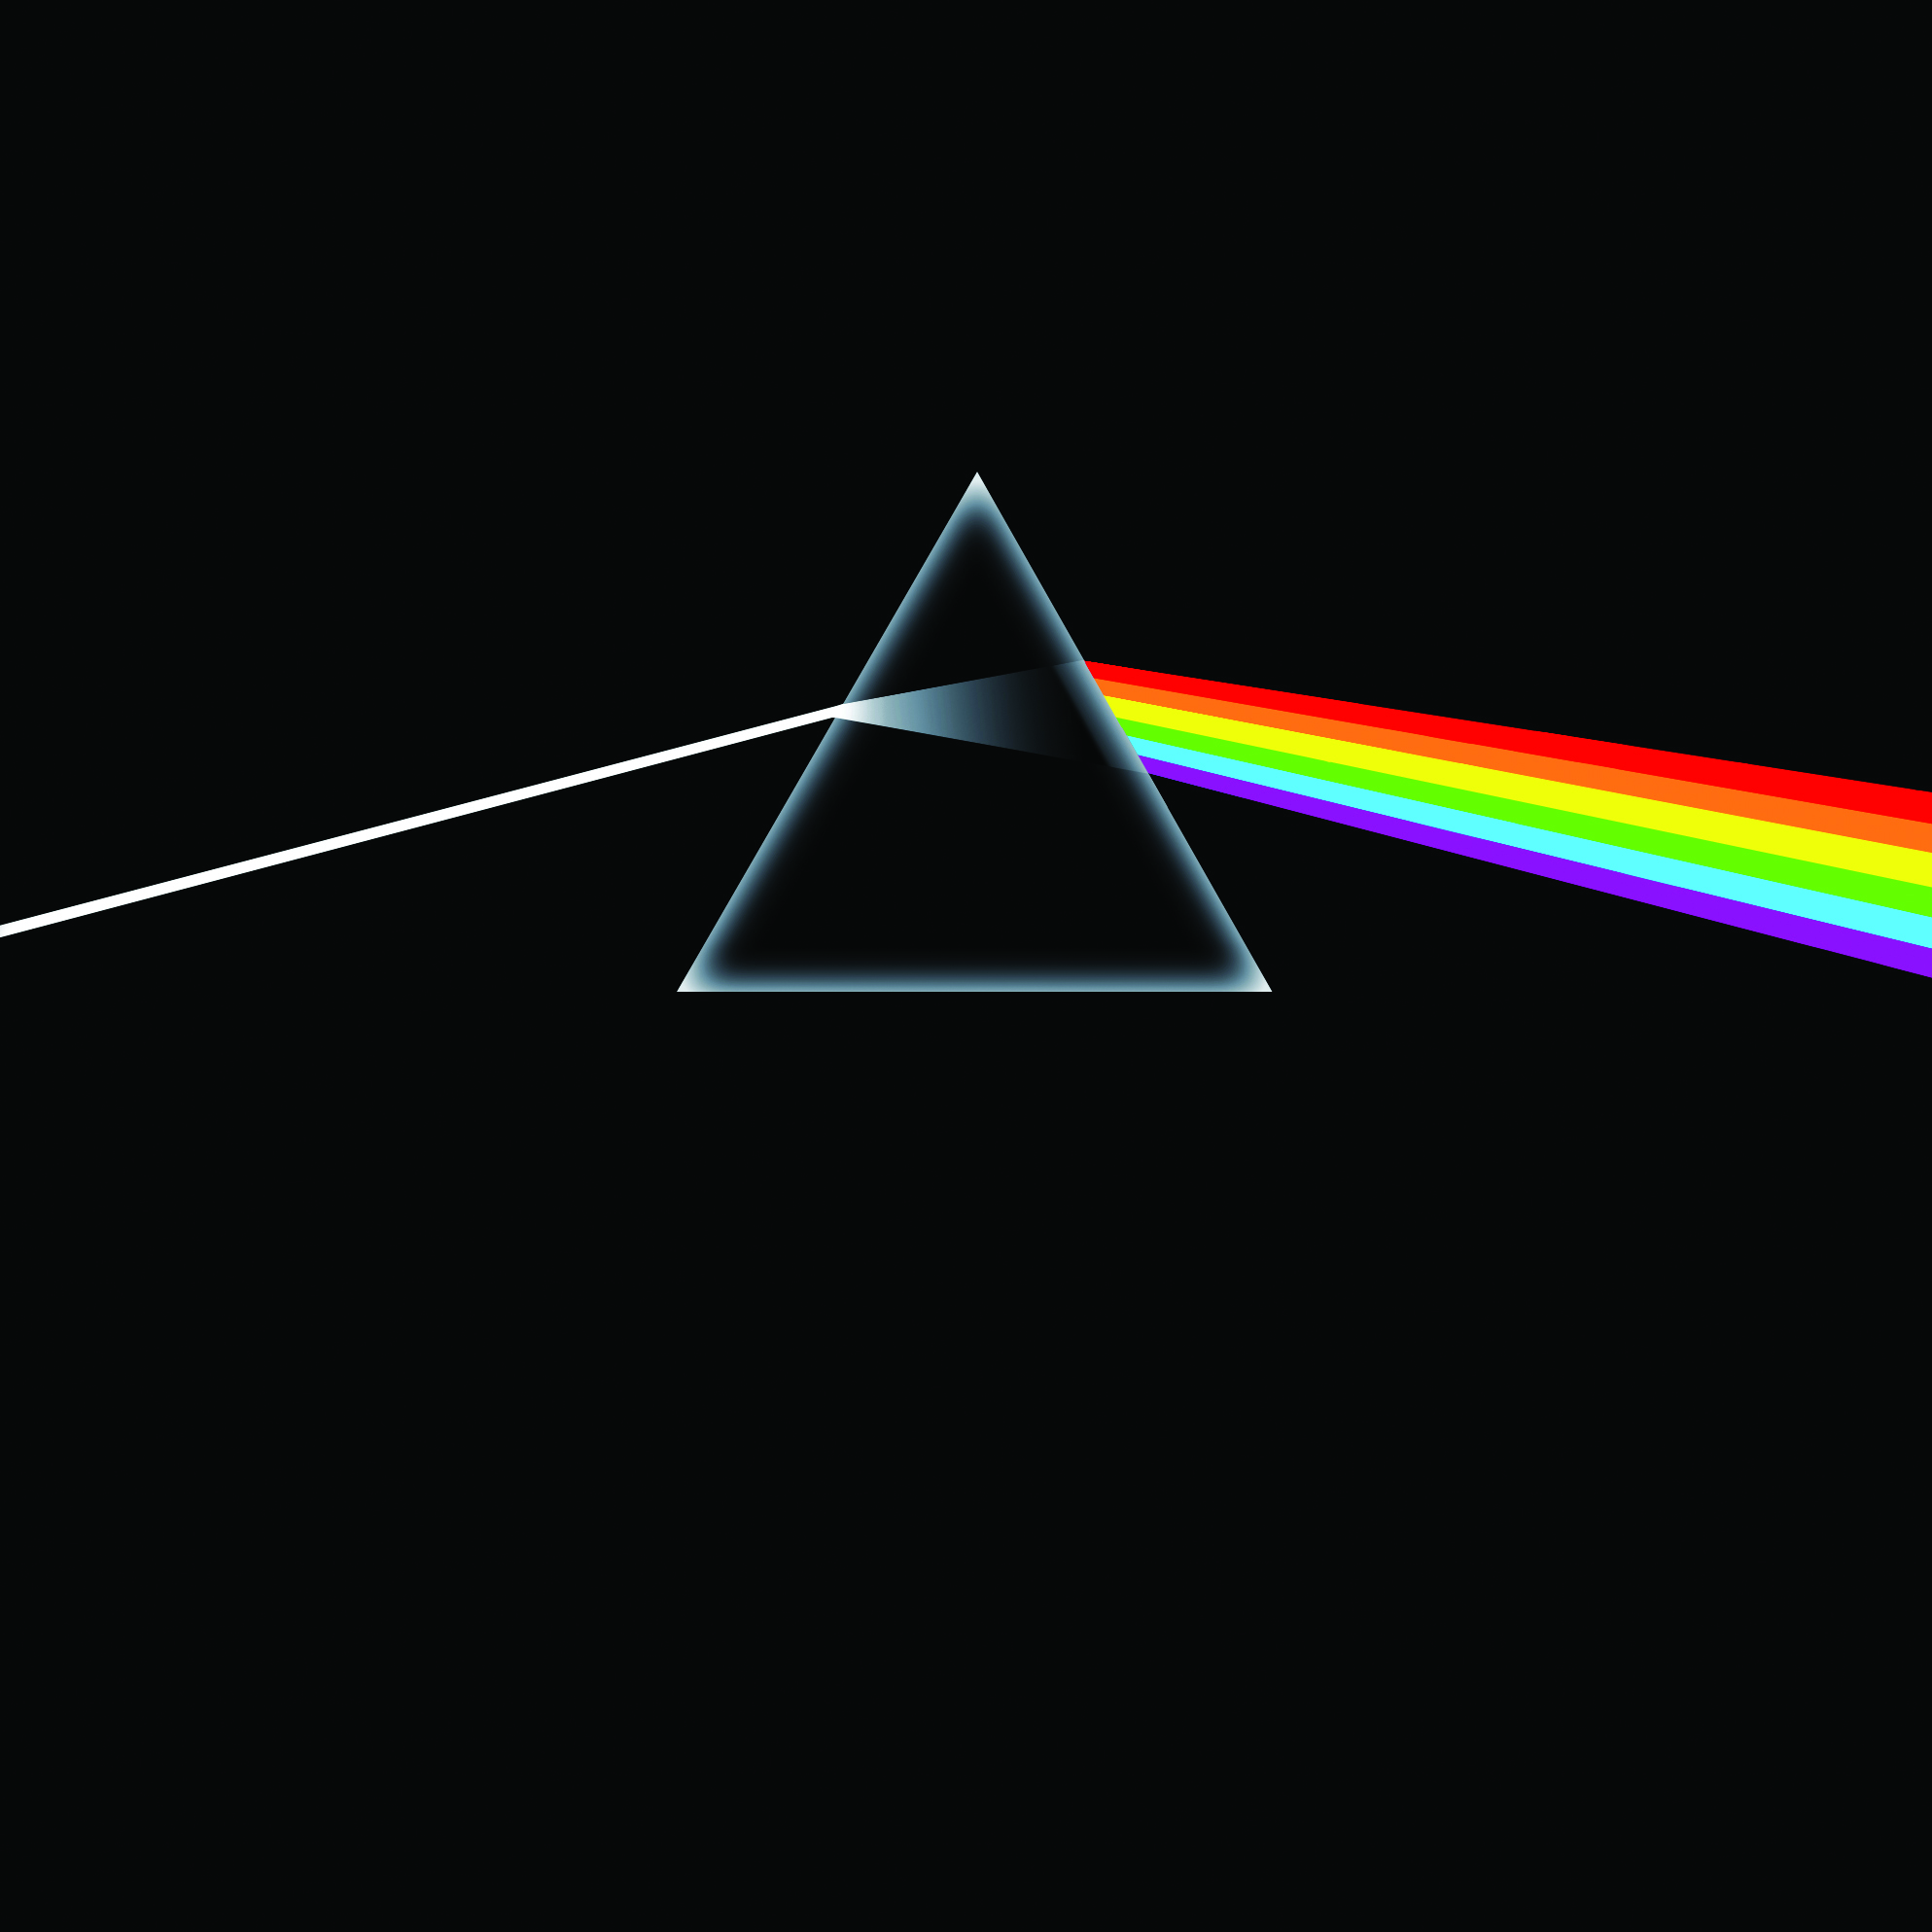 O famoso álbum do Pink Floyd